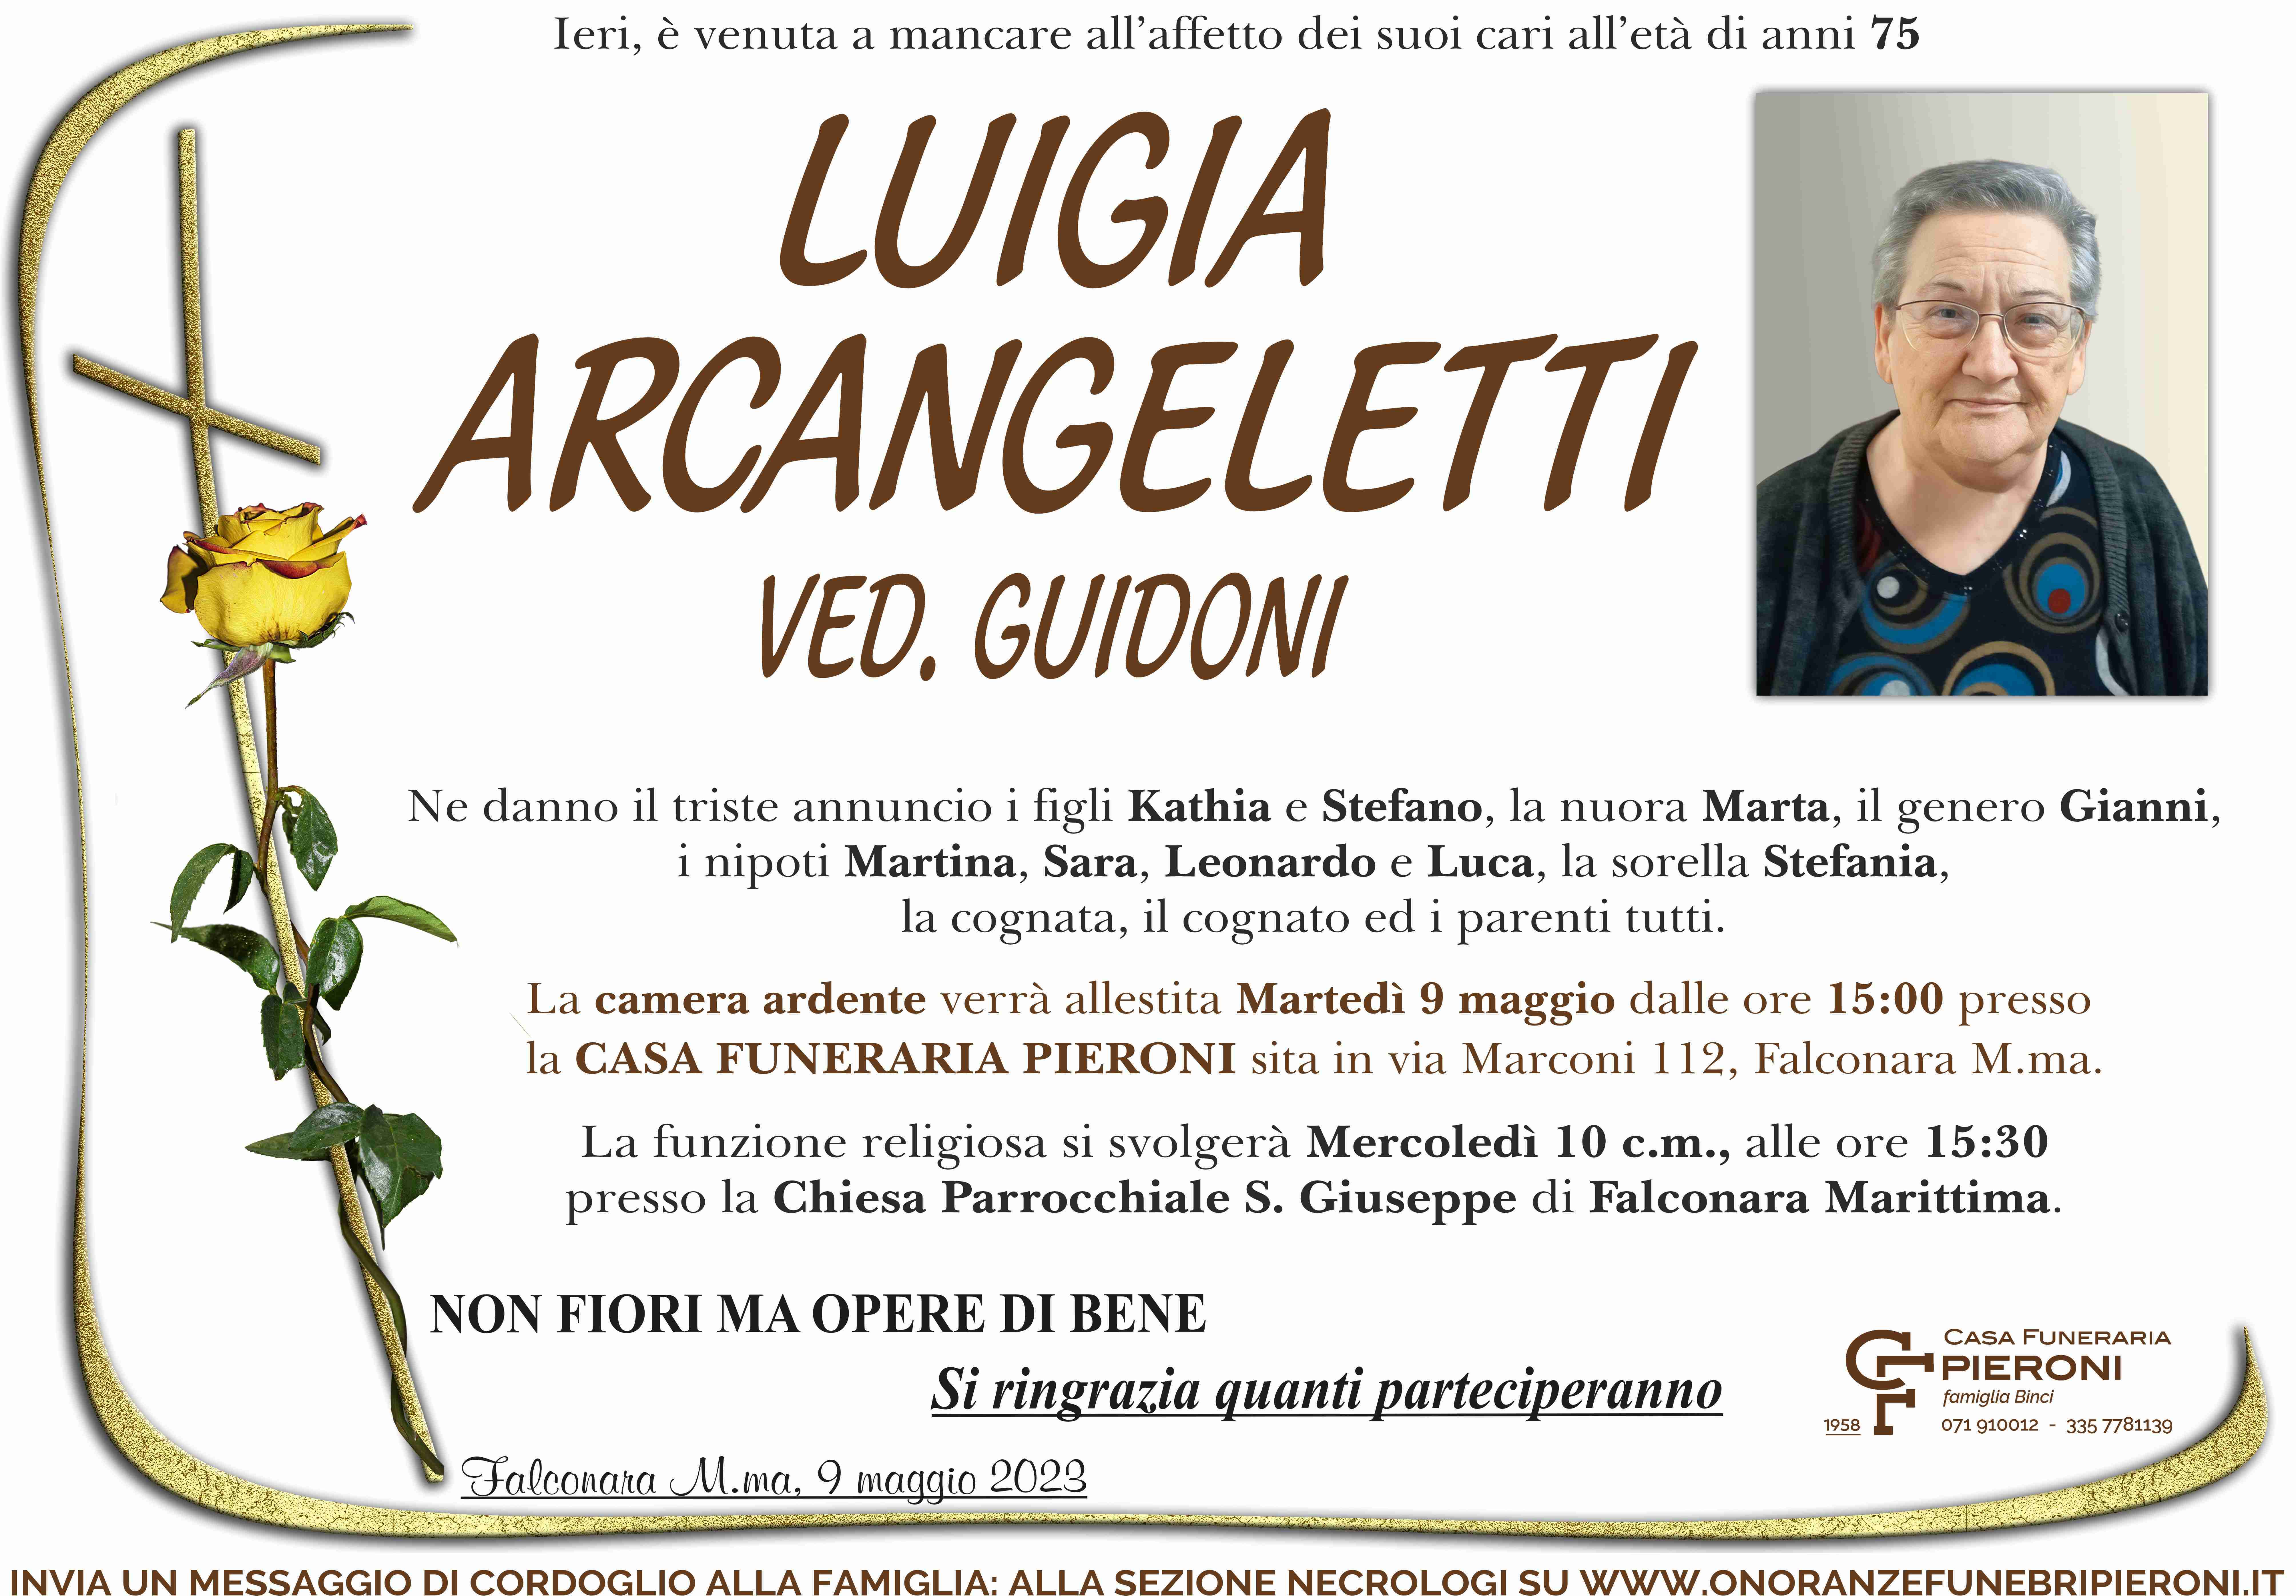 Luigia Arcangeletti